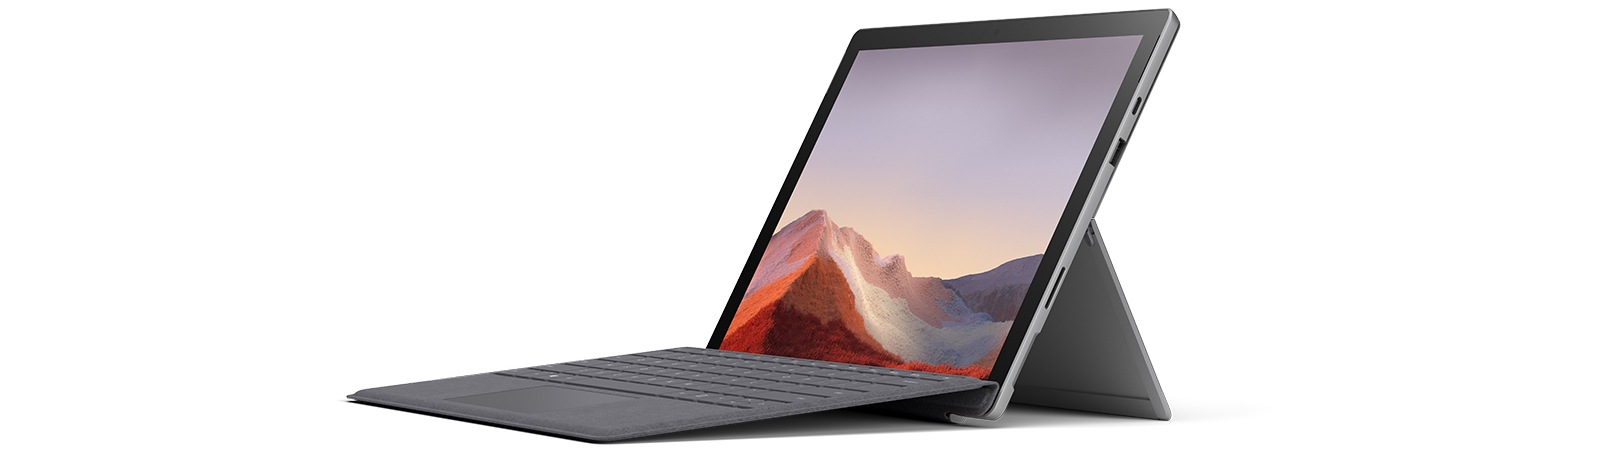 Surface Pro 7 Showing Screen, Keyboard, And Kickstand